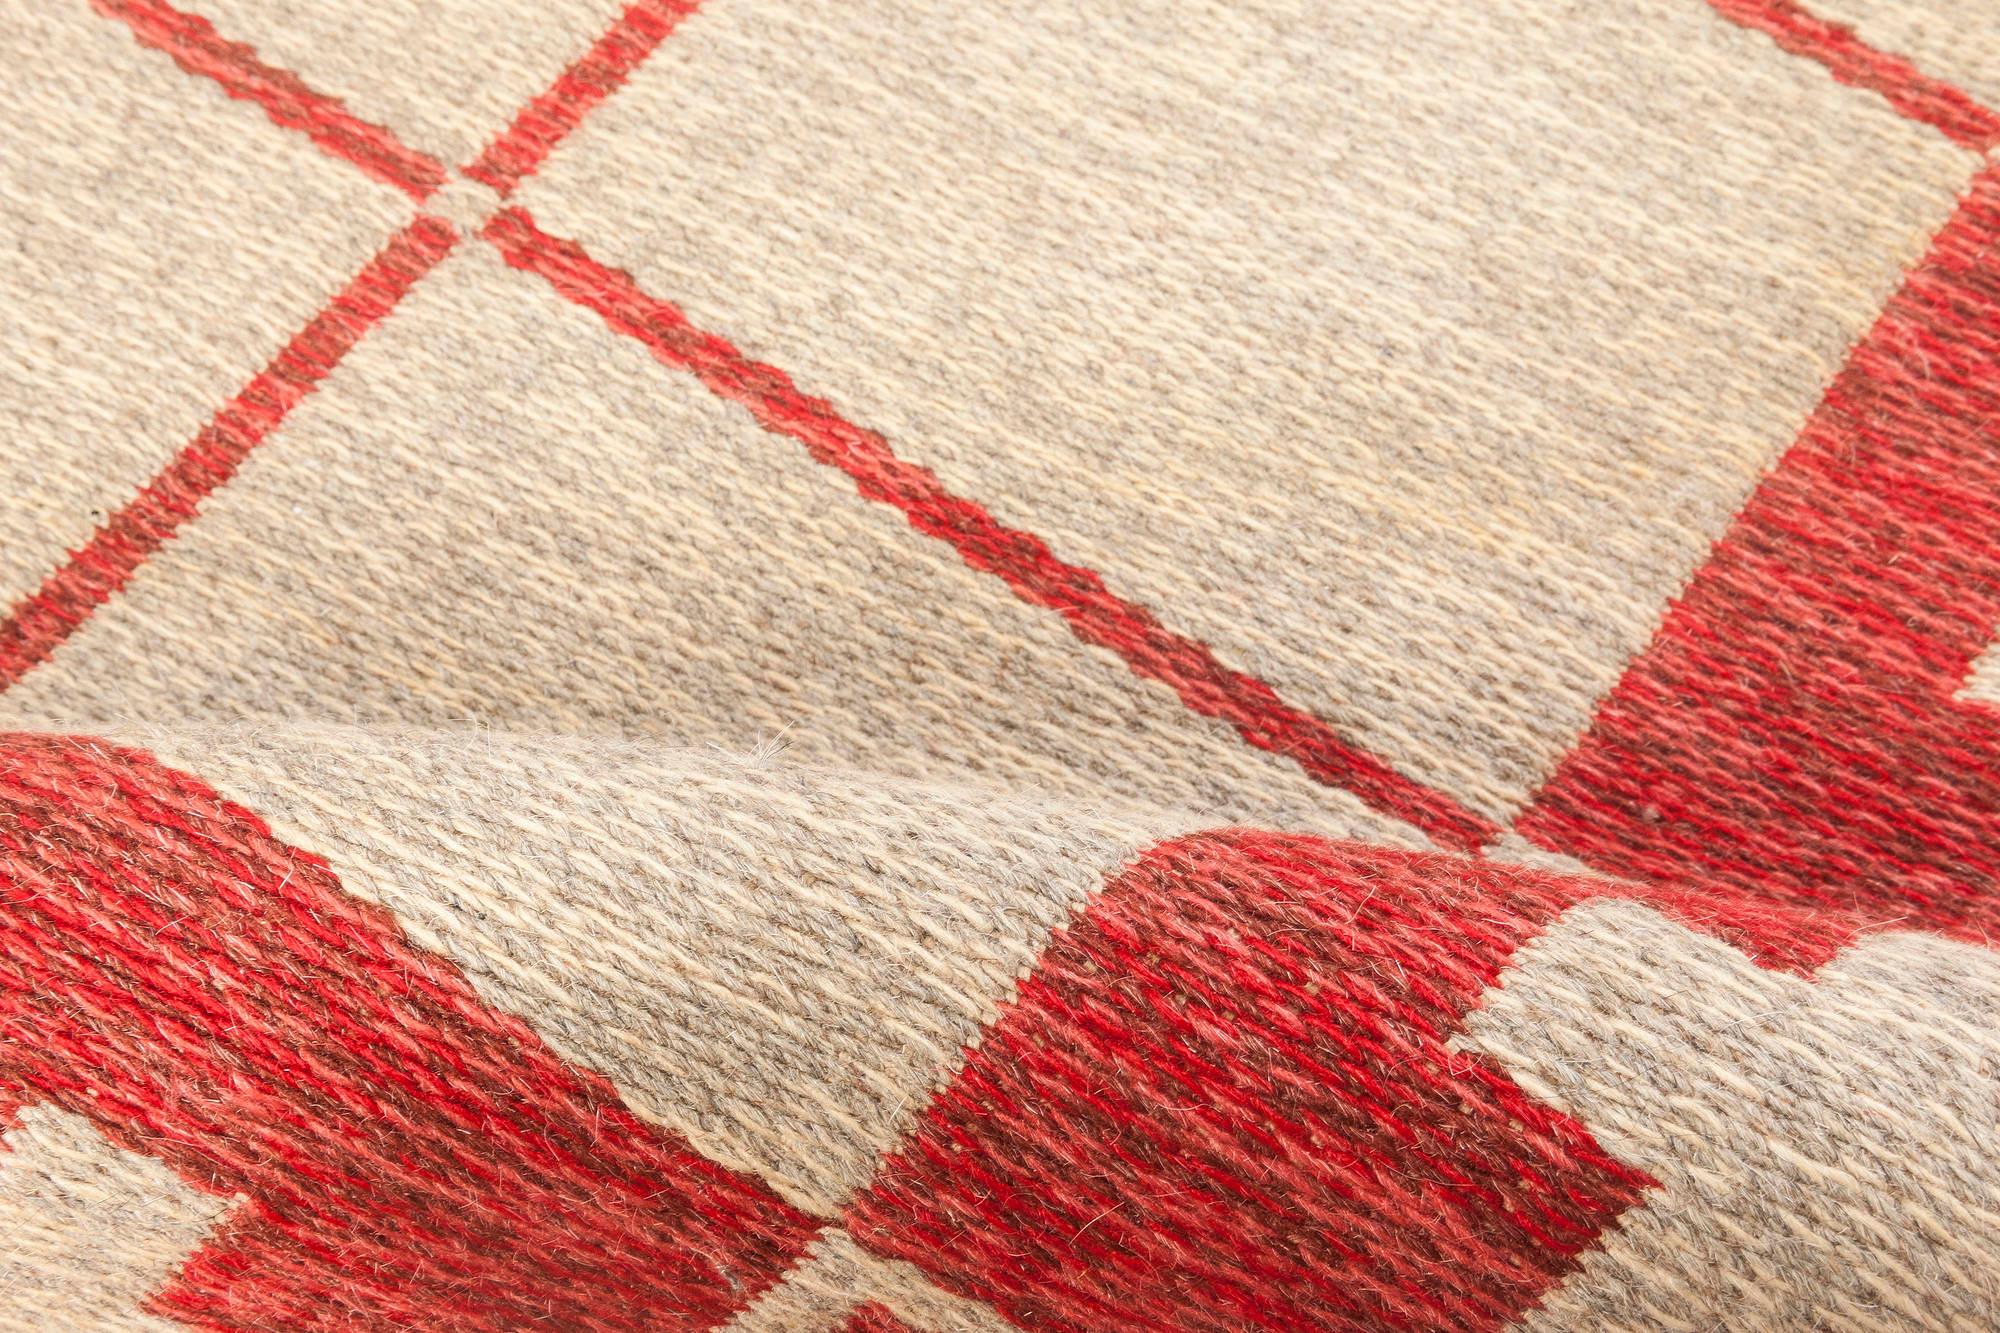 Mid-20th century Swedish flat-weave wool rug
Size: 5'3